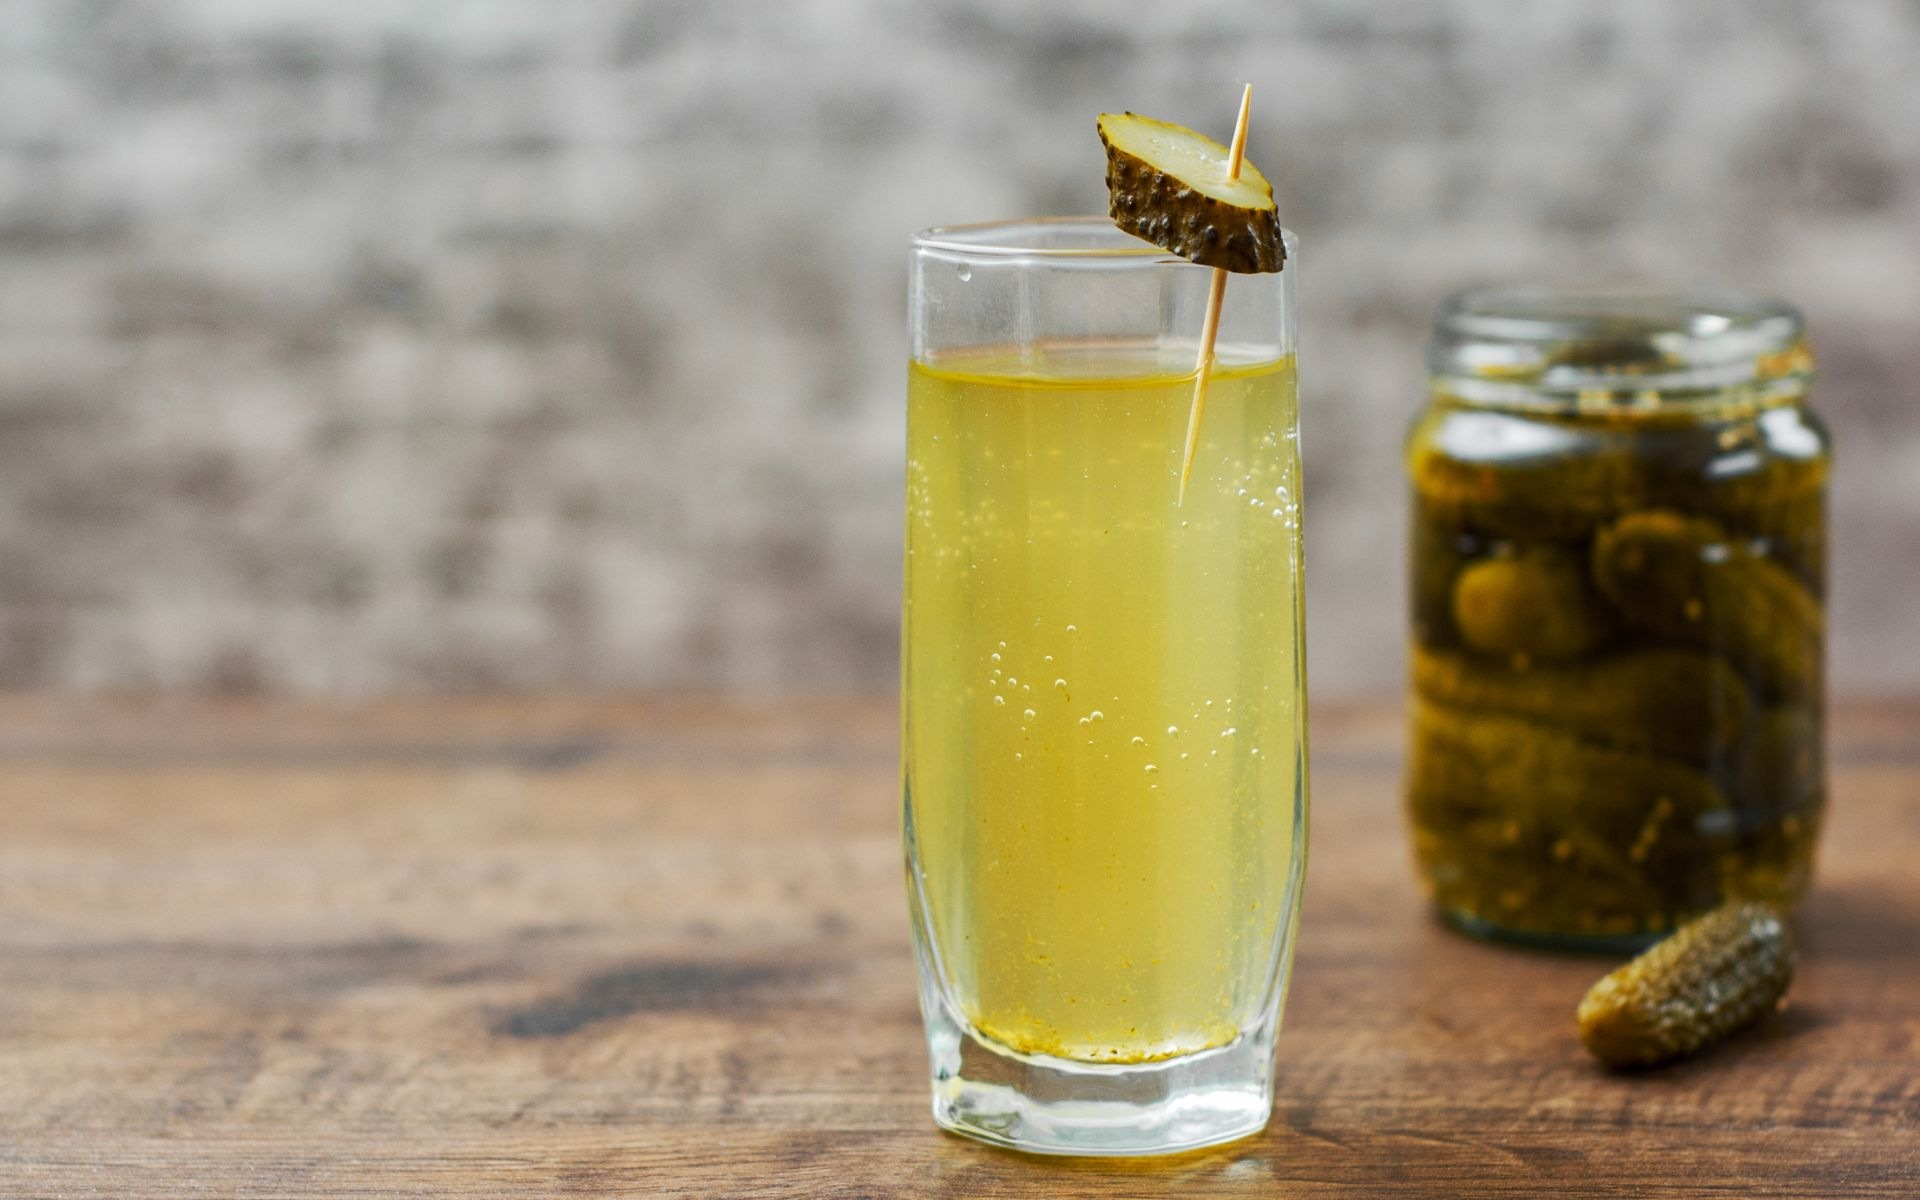 Wondrous Benefits of Drinking Pickle Juice